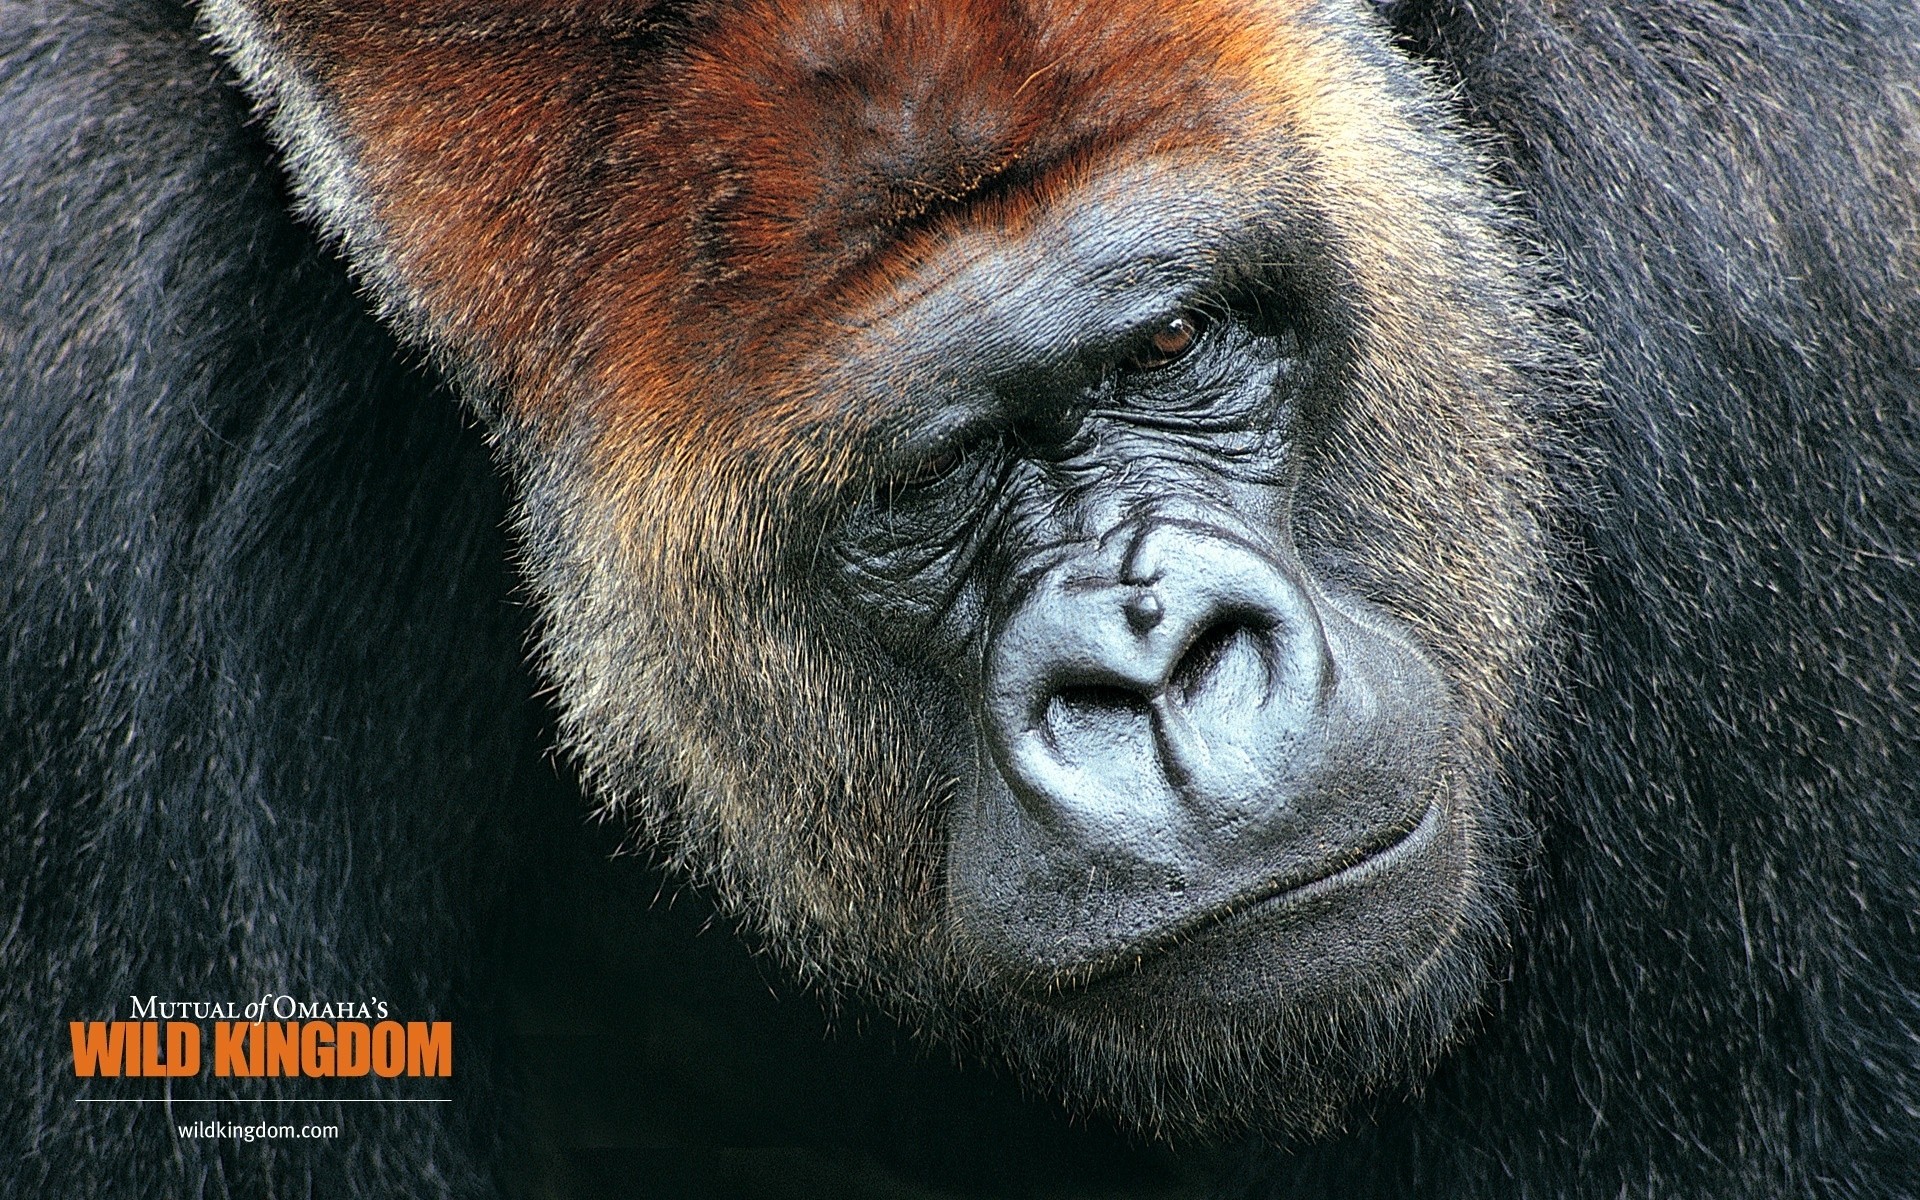 animals wildlife mammal ape primate animal zoo fur wild monkey gorilla portrait big hairy